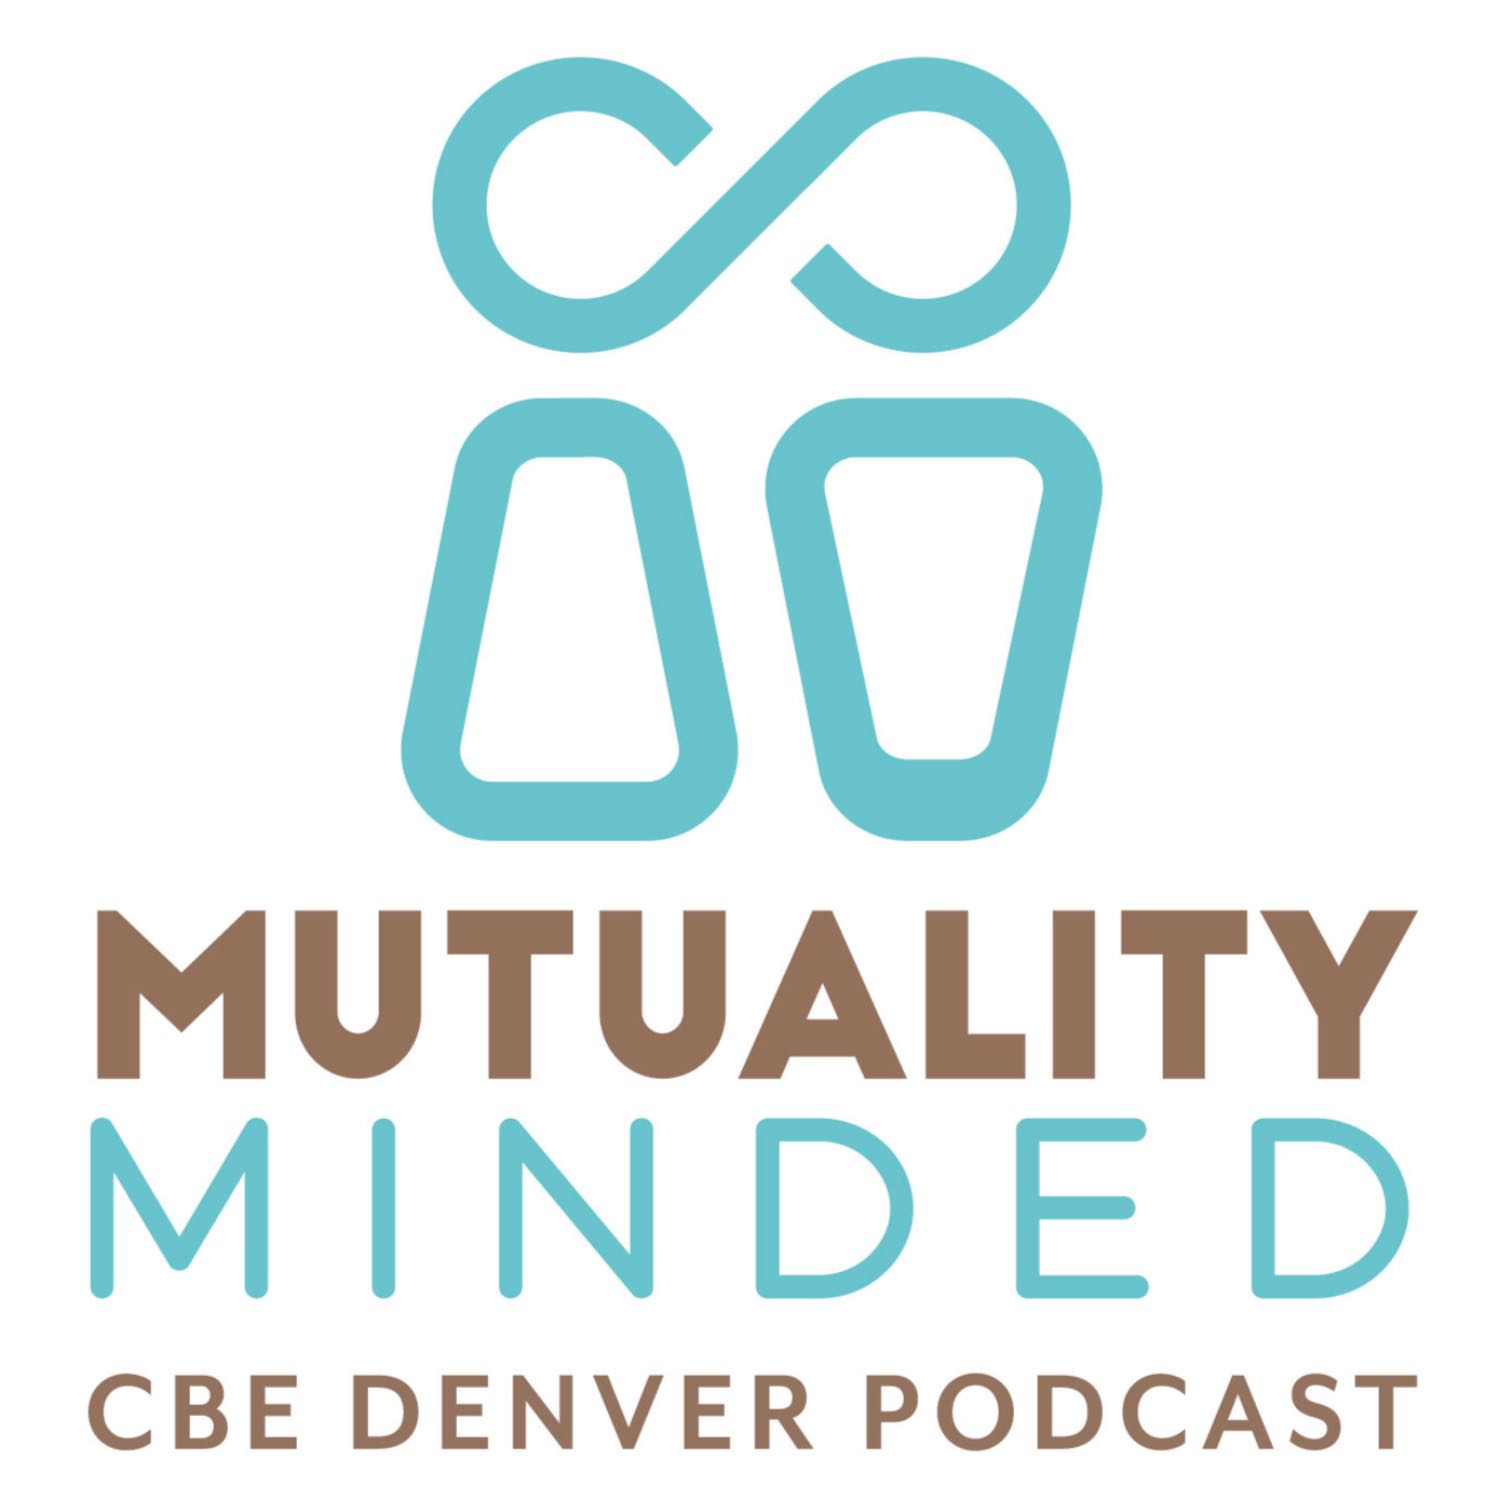 CBE Denver's Mutuality Minded:CBE Denver Chapter